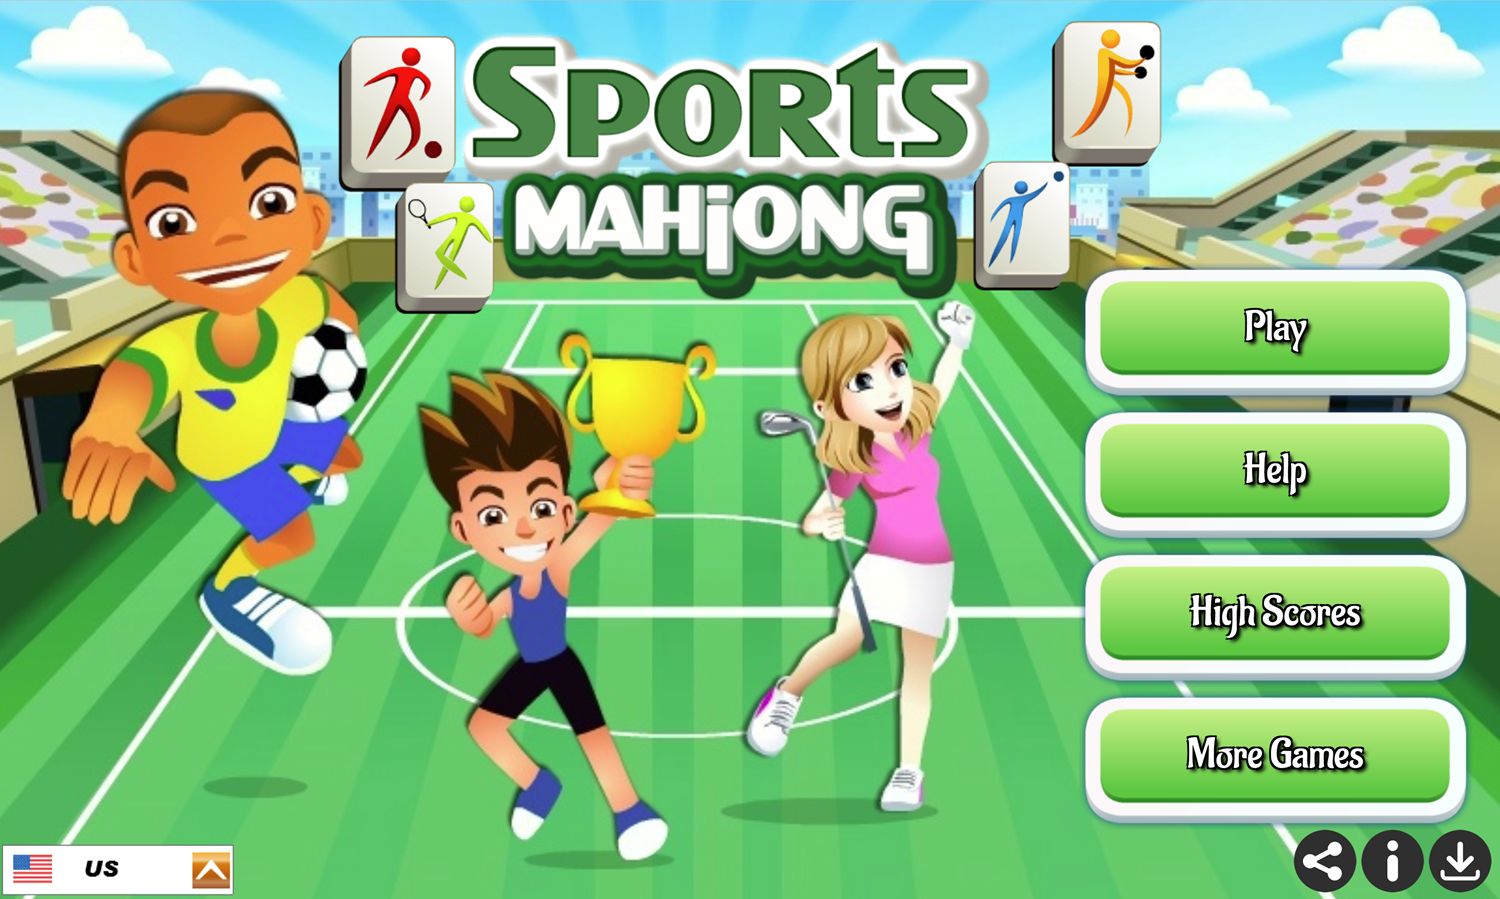 Sports Mahjong Game Welcome Screen Screenshot.